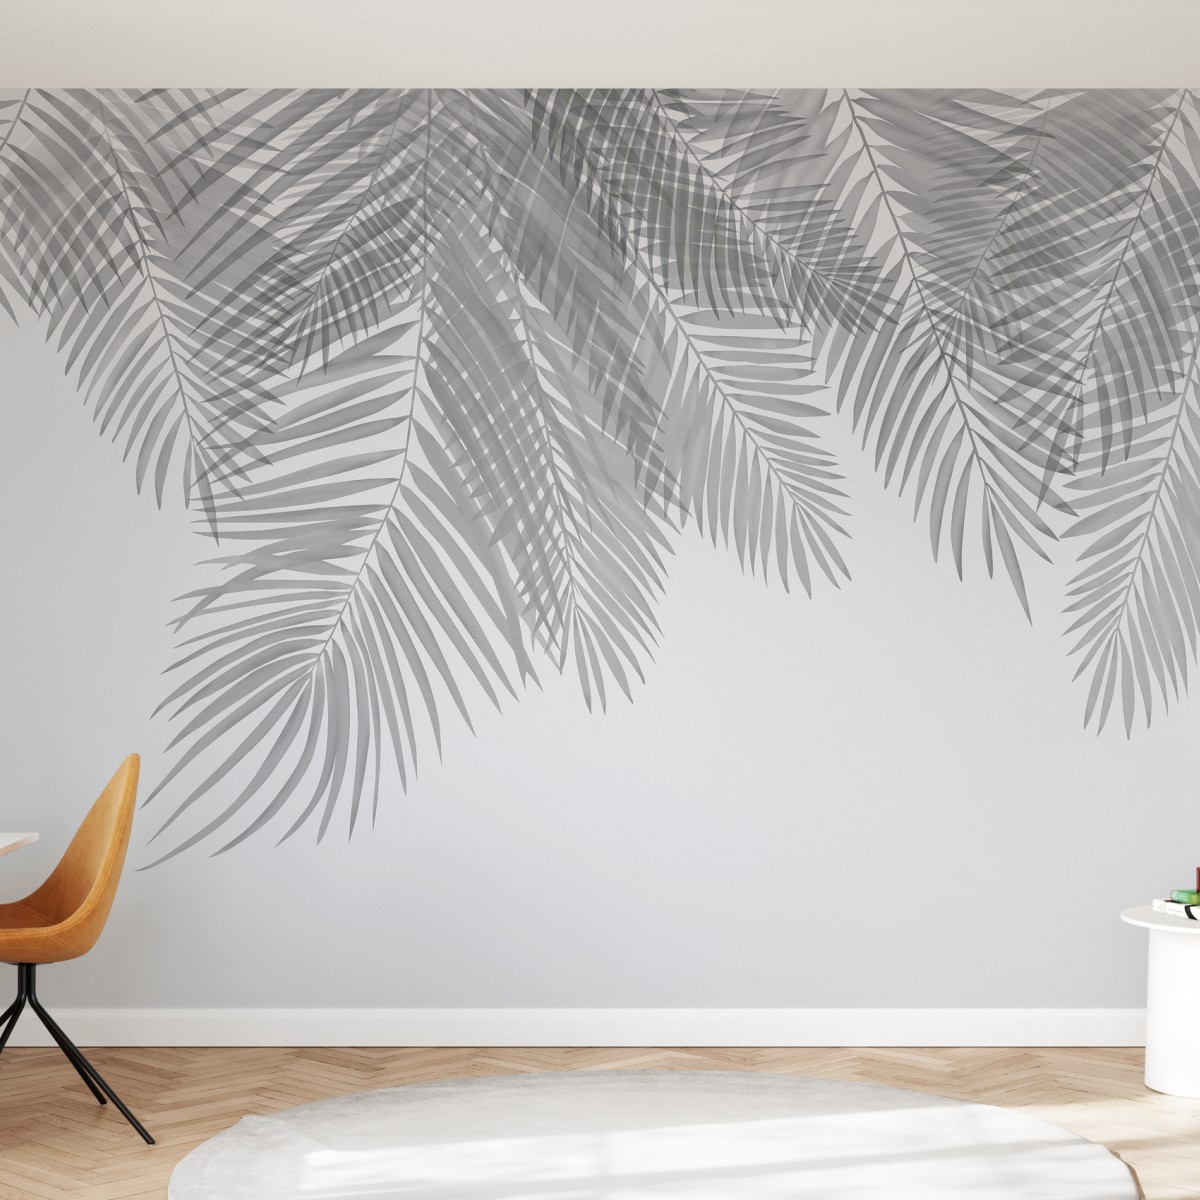 Fototapet Hanging Palm Leaves, Gray, Personalizat, Photowall, Fototapet living 